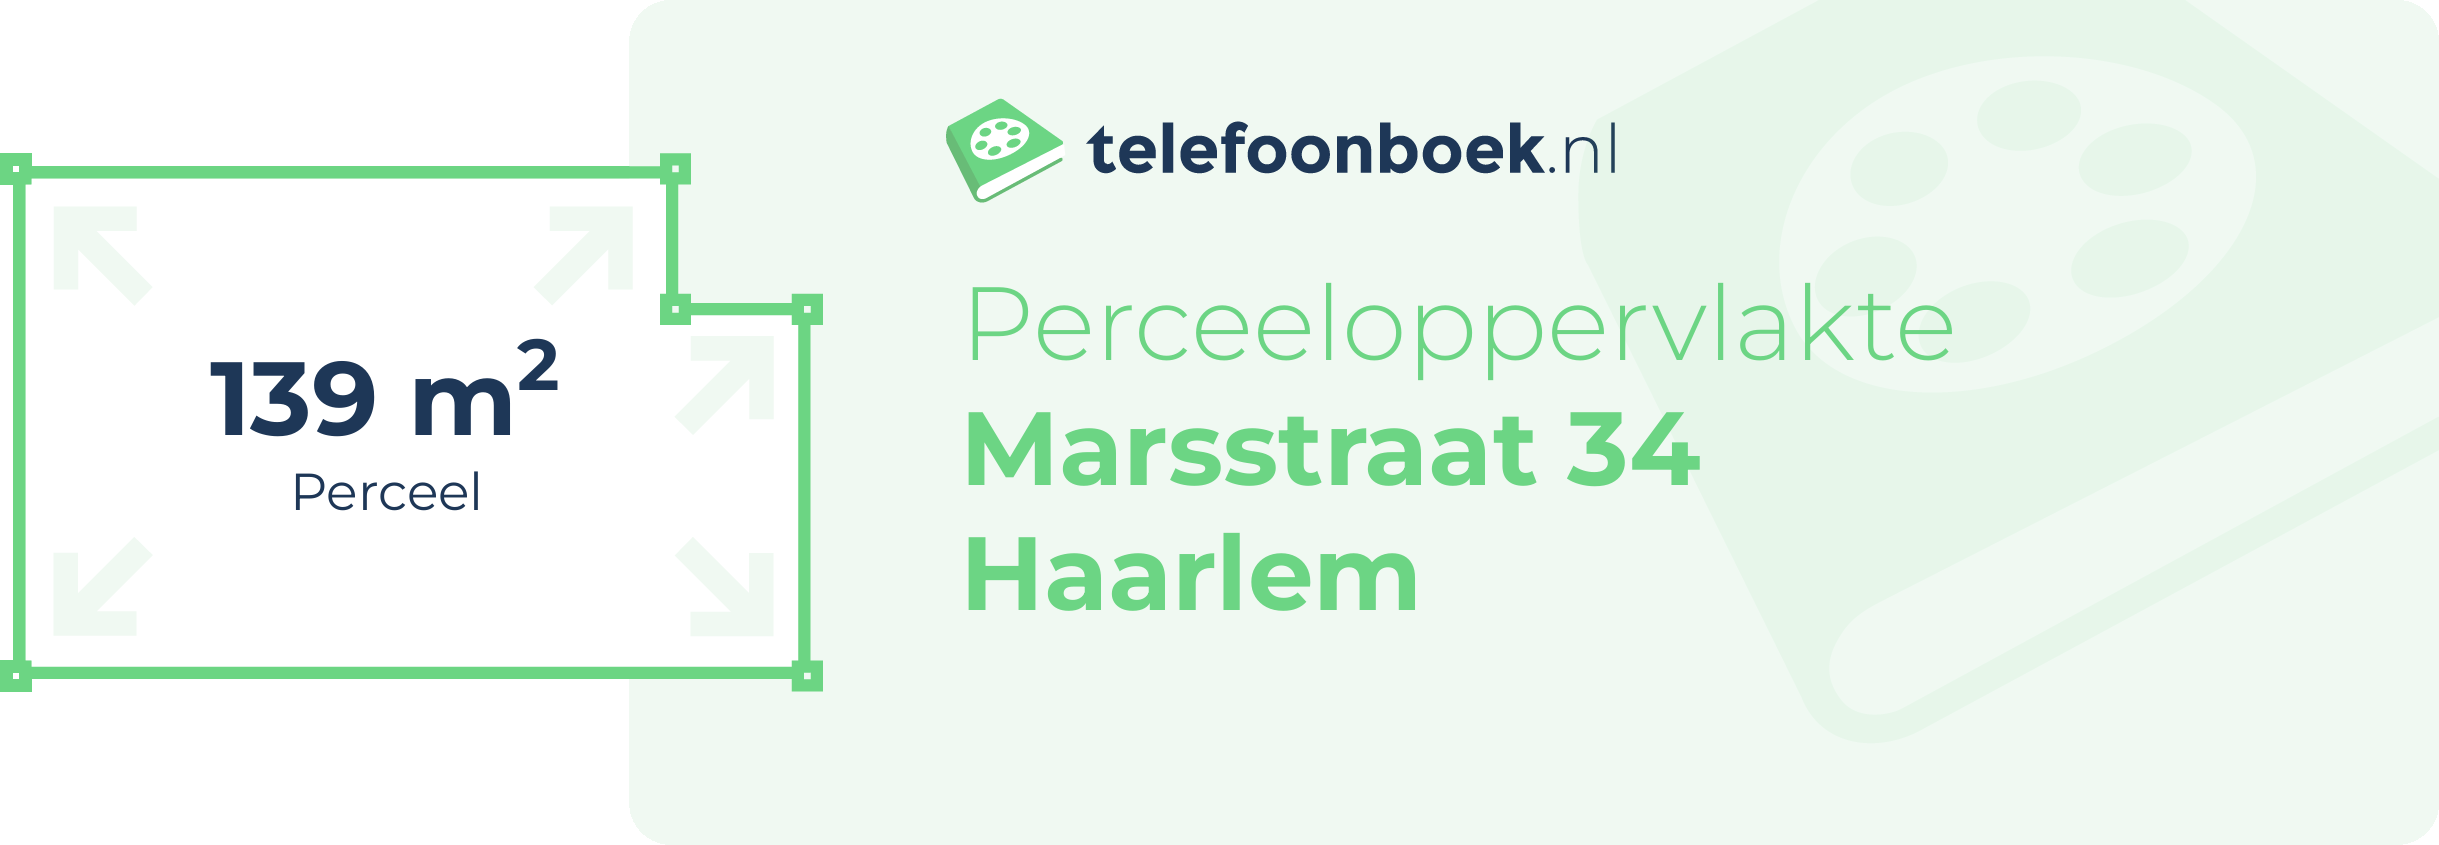 Perceeloppervlakte Marsstraat 34 Haarlem